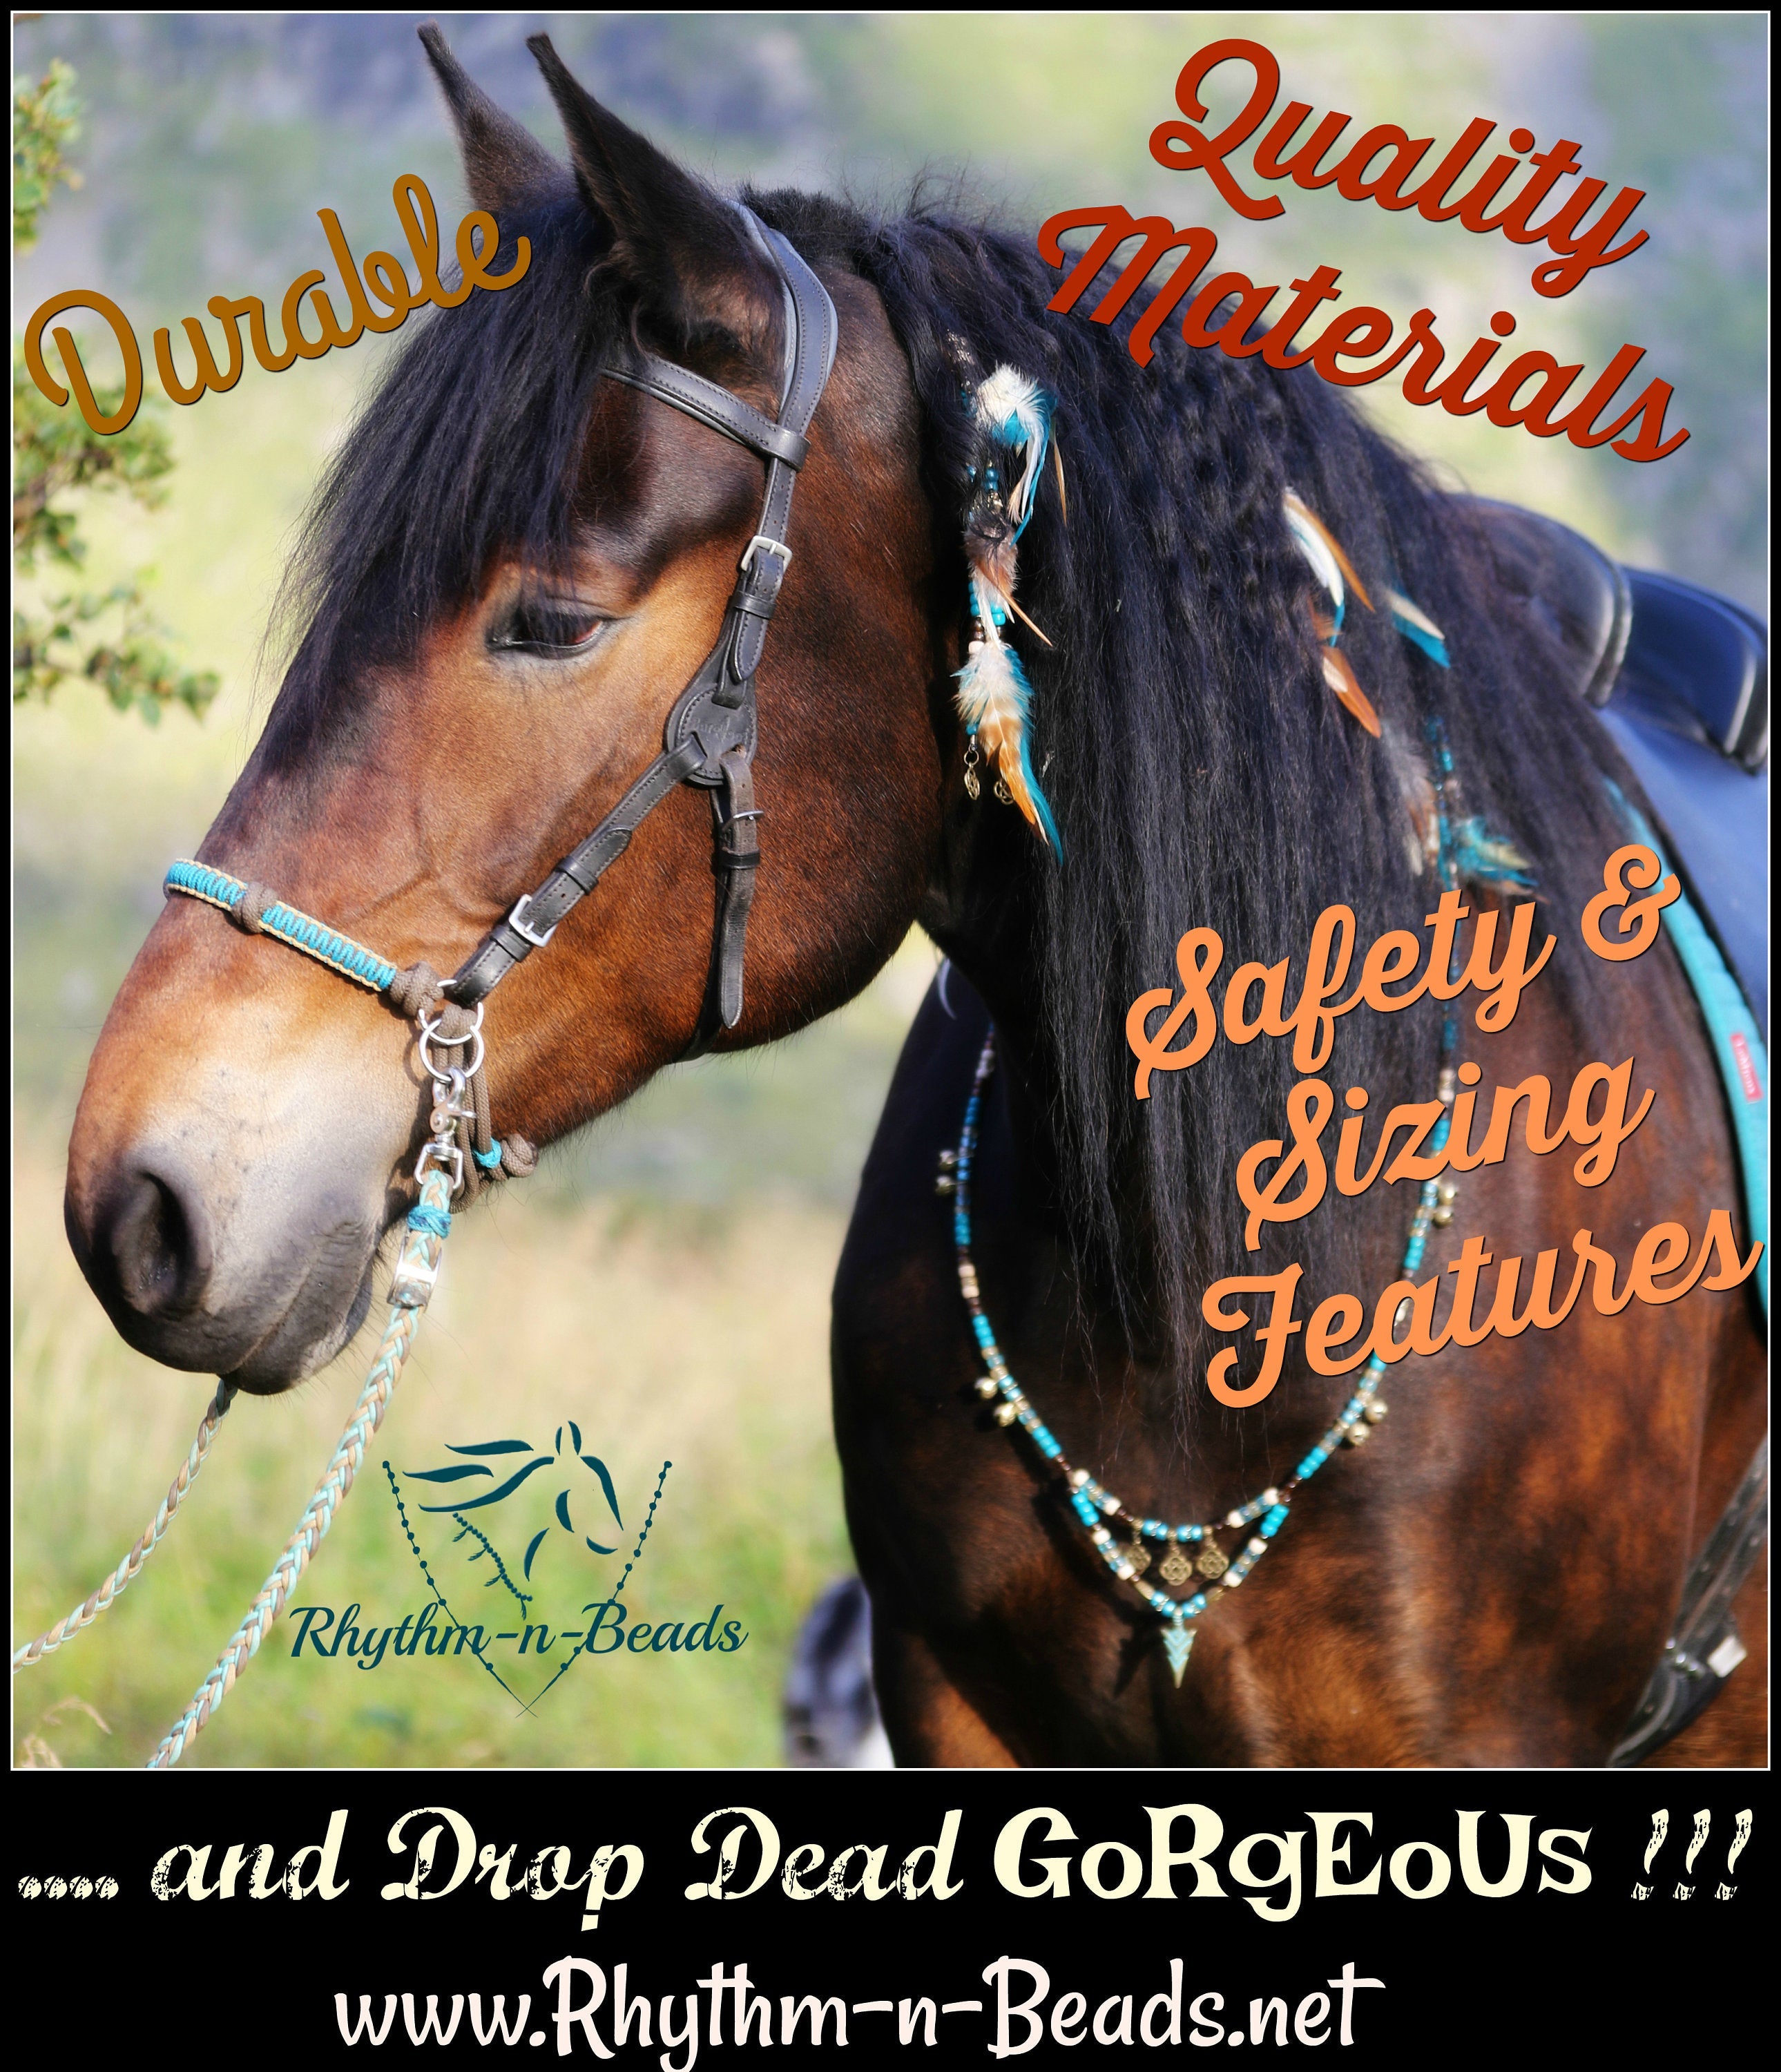 Horse Rhythm Beads, O&#39; SUNNY DAY, Trail Beads for Horses, Horse Beads, Natural Horsemanship,Native Beads,Horse Bells, Bear Bells